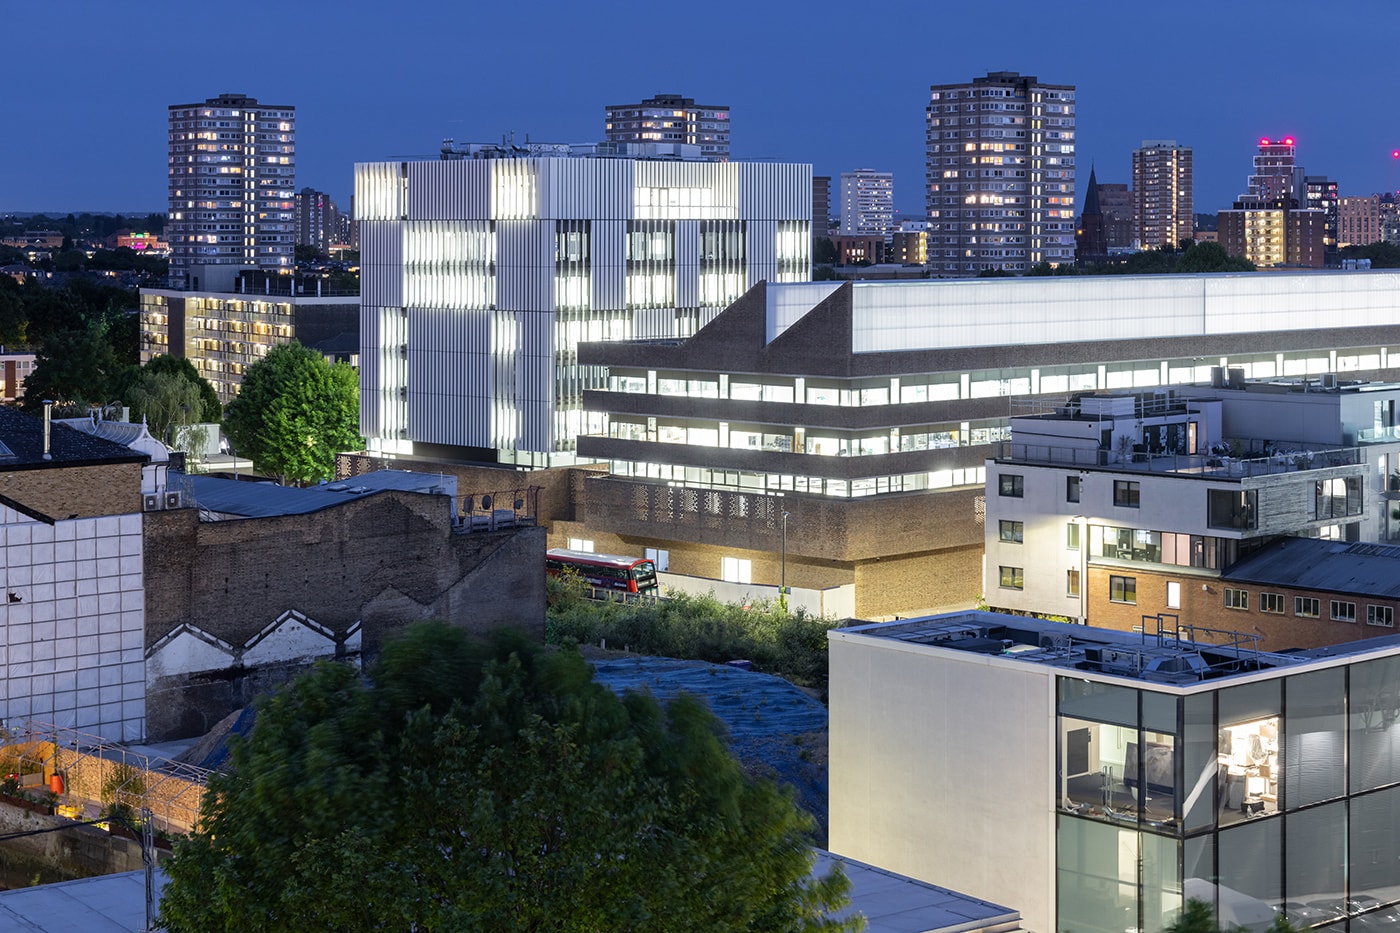 Herzog & De Meuron's Long-Awaited Royal College of Art Campus Opens